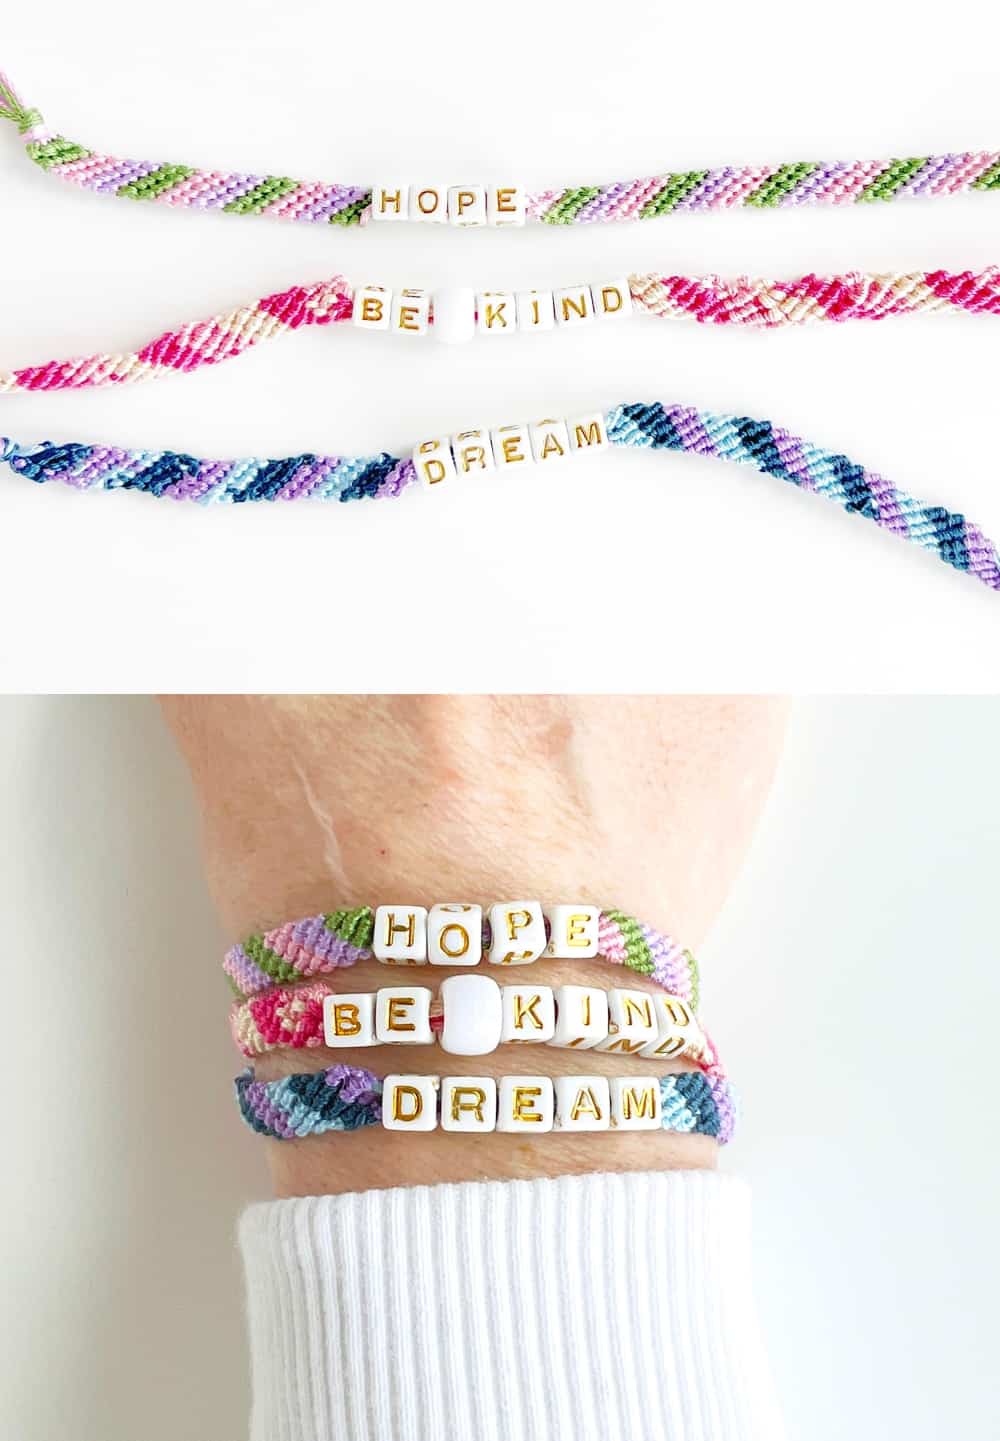 Cute DIY Summer Friendship Bracelet with Letter Beads